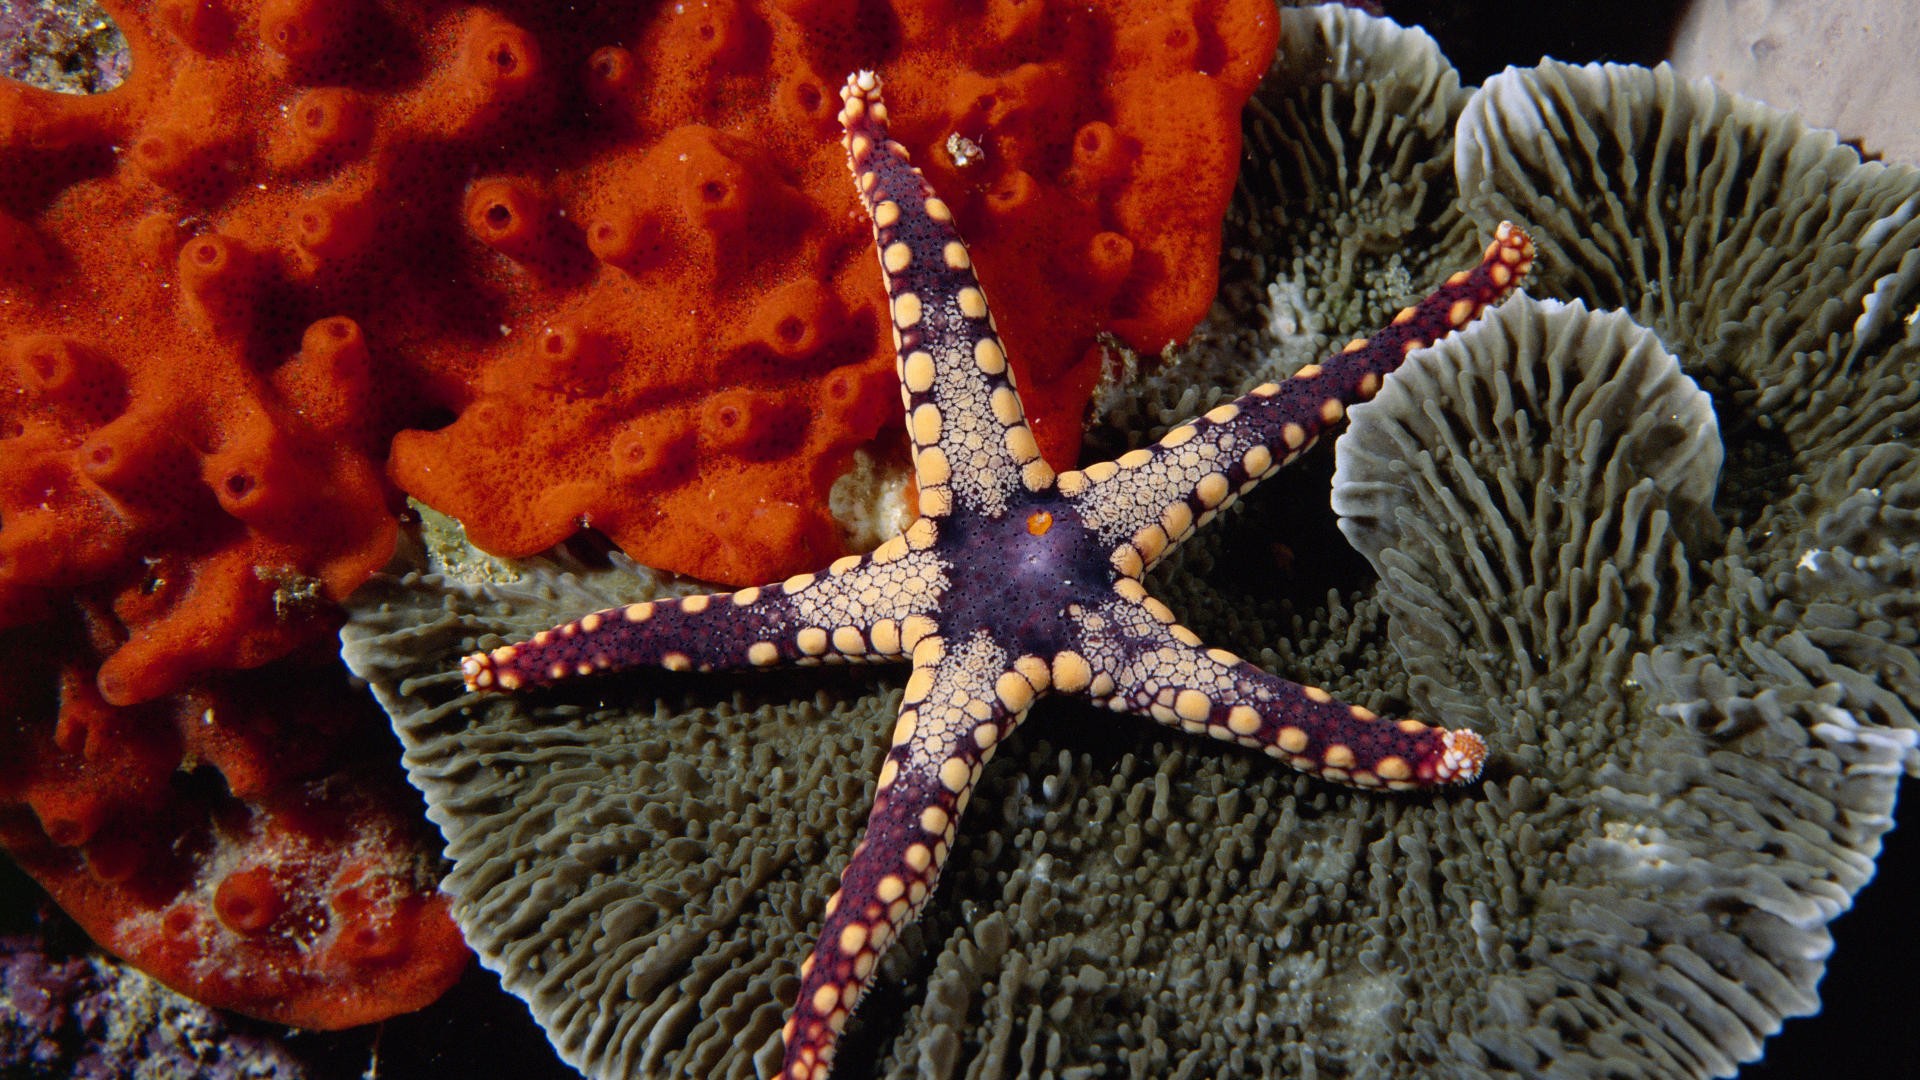 General 1920x1080 underwater starfish sea life animals coral